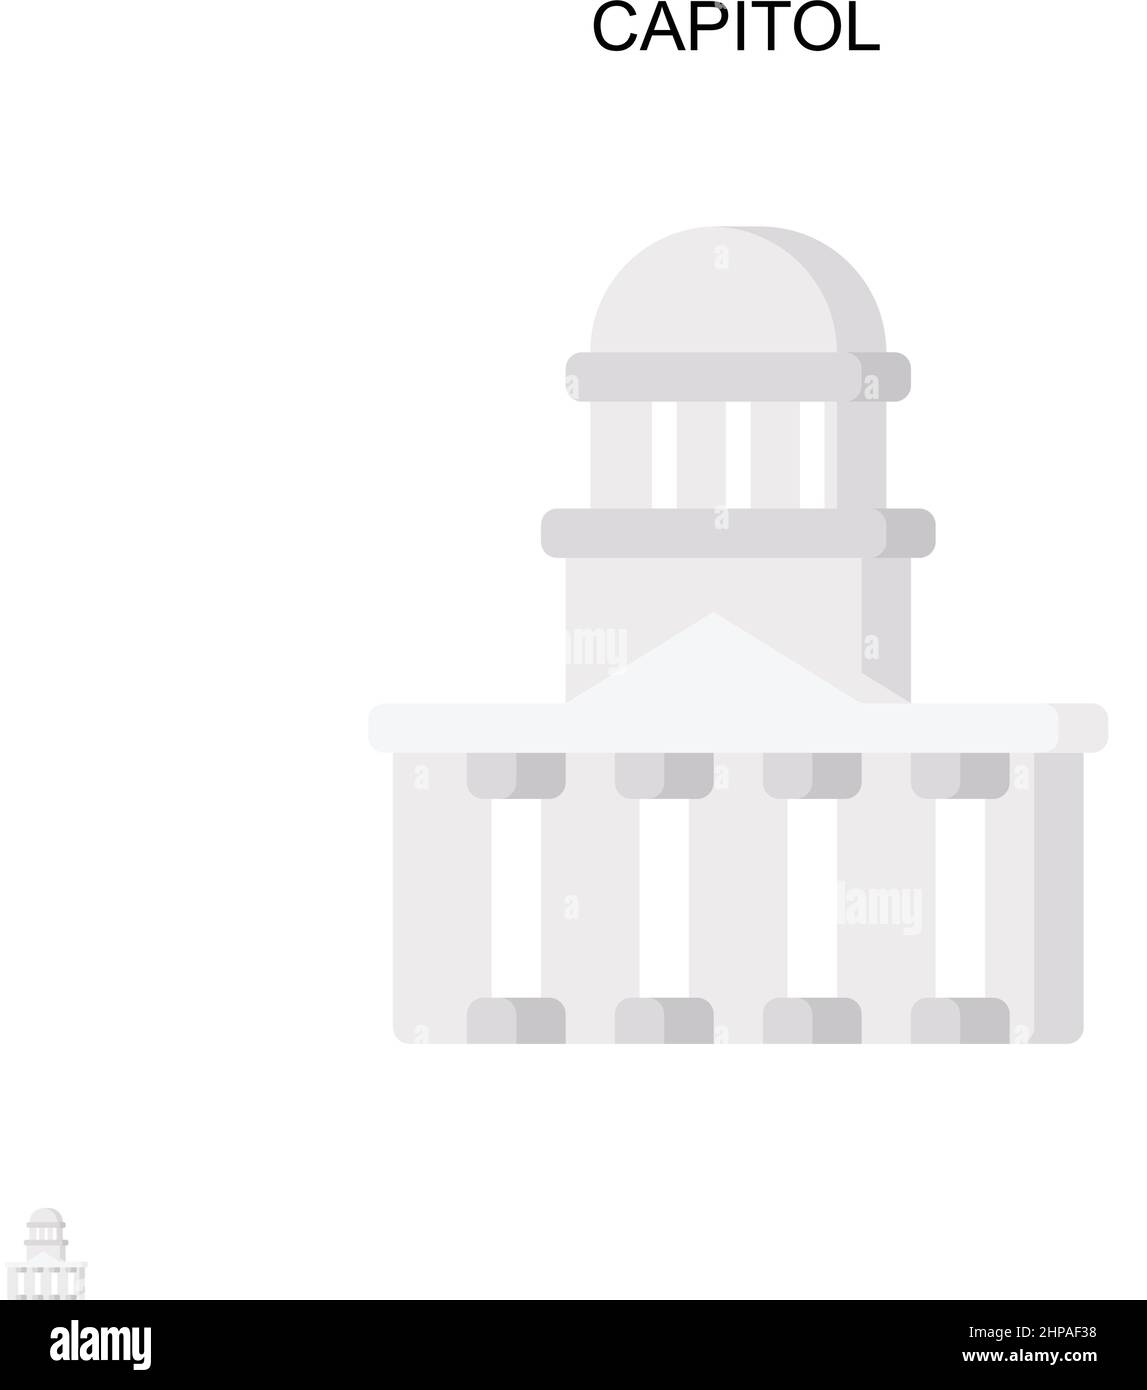 Einfaches Vektorsymbol Capitol. Illustration Symbol Design-Vorlage für Web mobile UI-Element. Stock Vektor